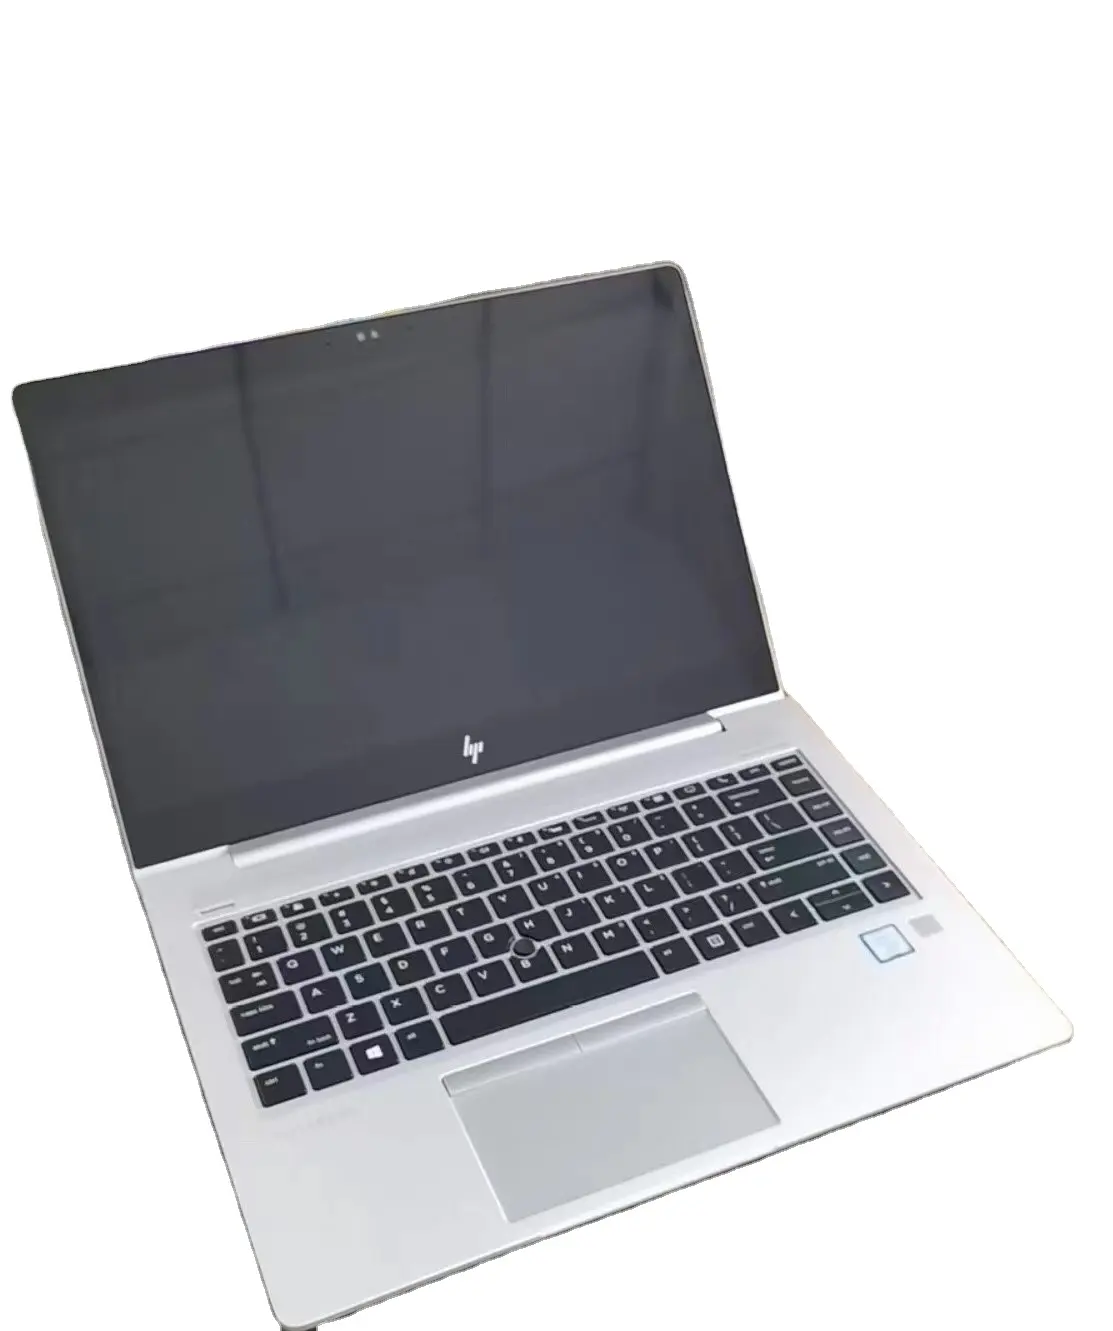 Hp Elitebook 840 G5 I7-8th Gen 8GB Ram digunakan Laptop Core Win10 14 inci Laptop bekas portabel komputer Bisnis Desktop